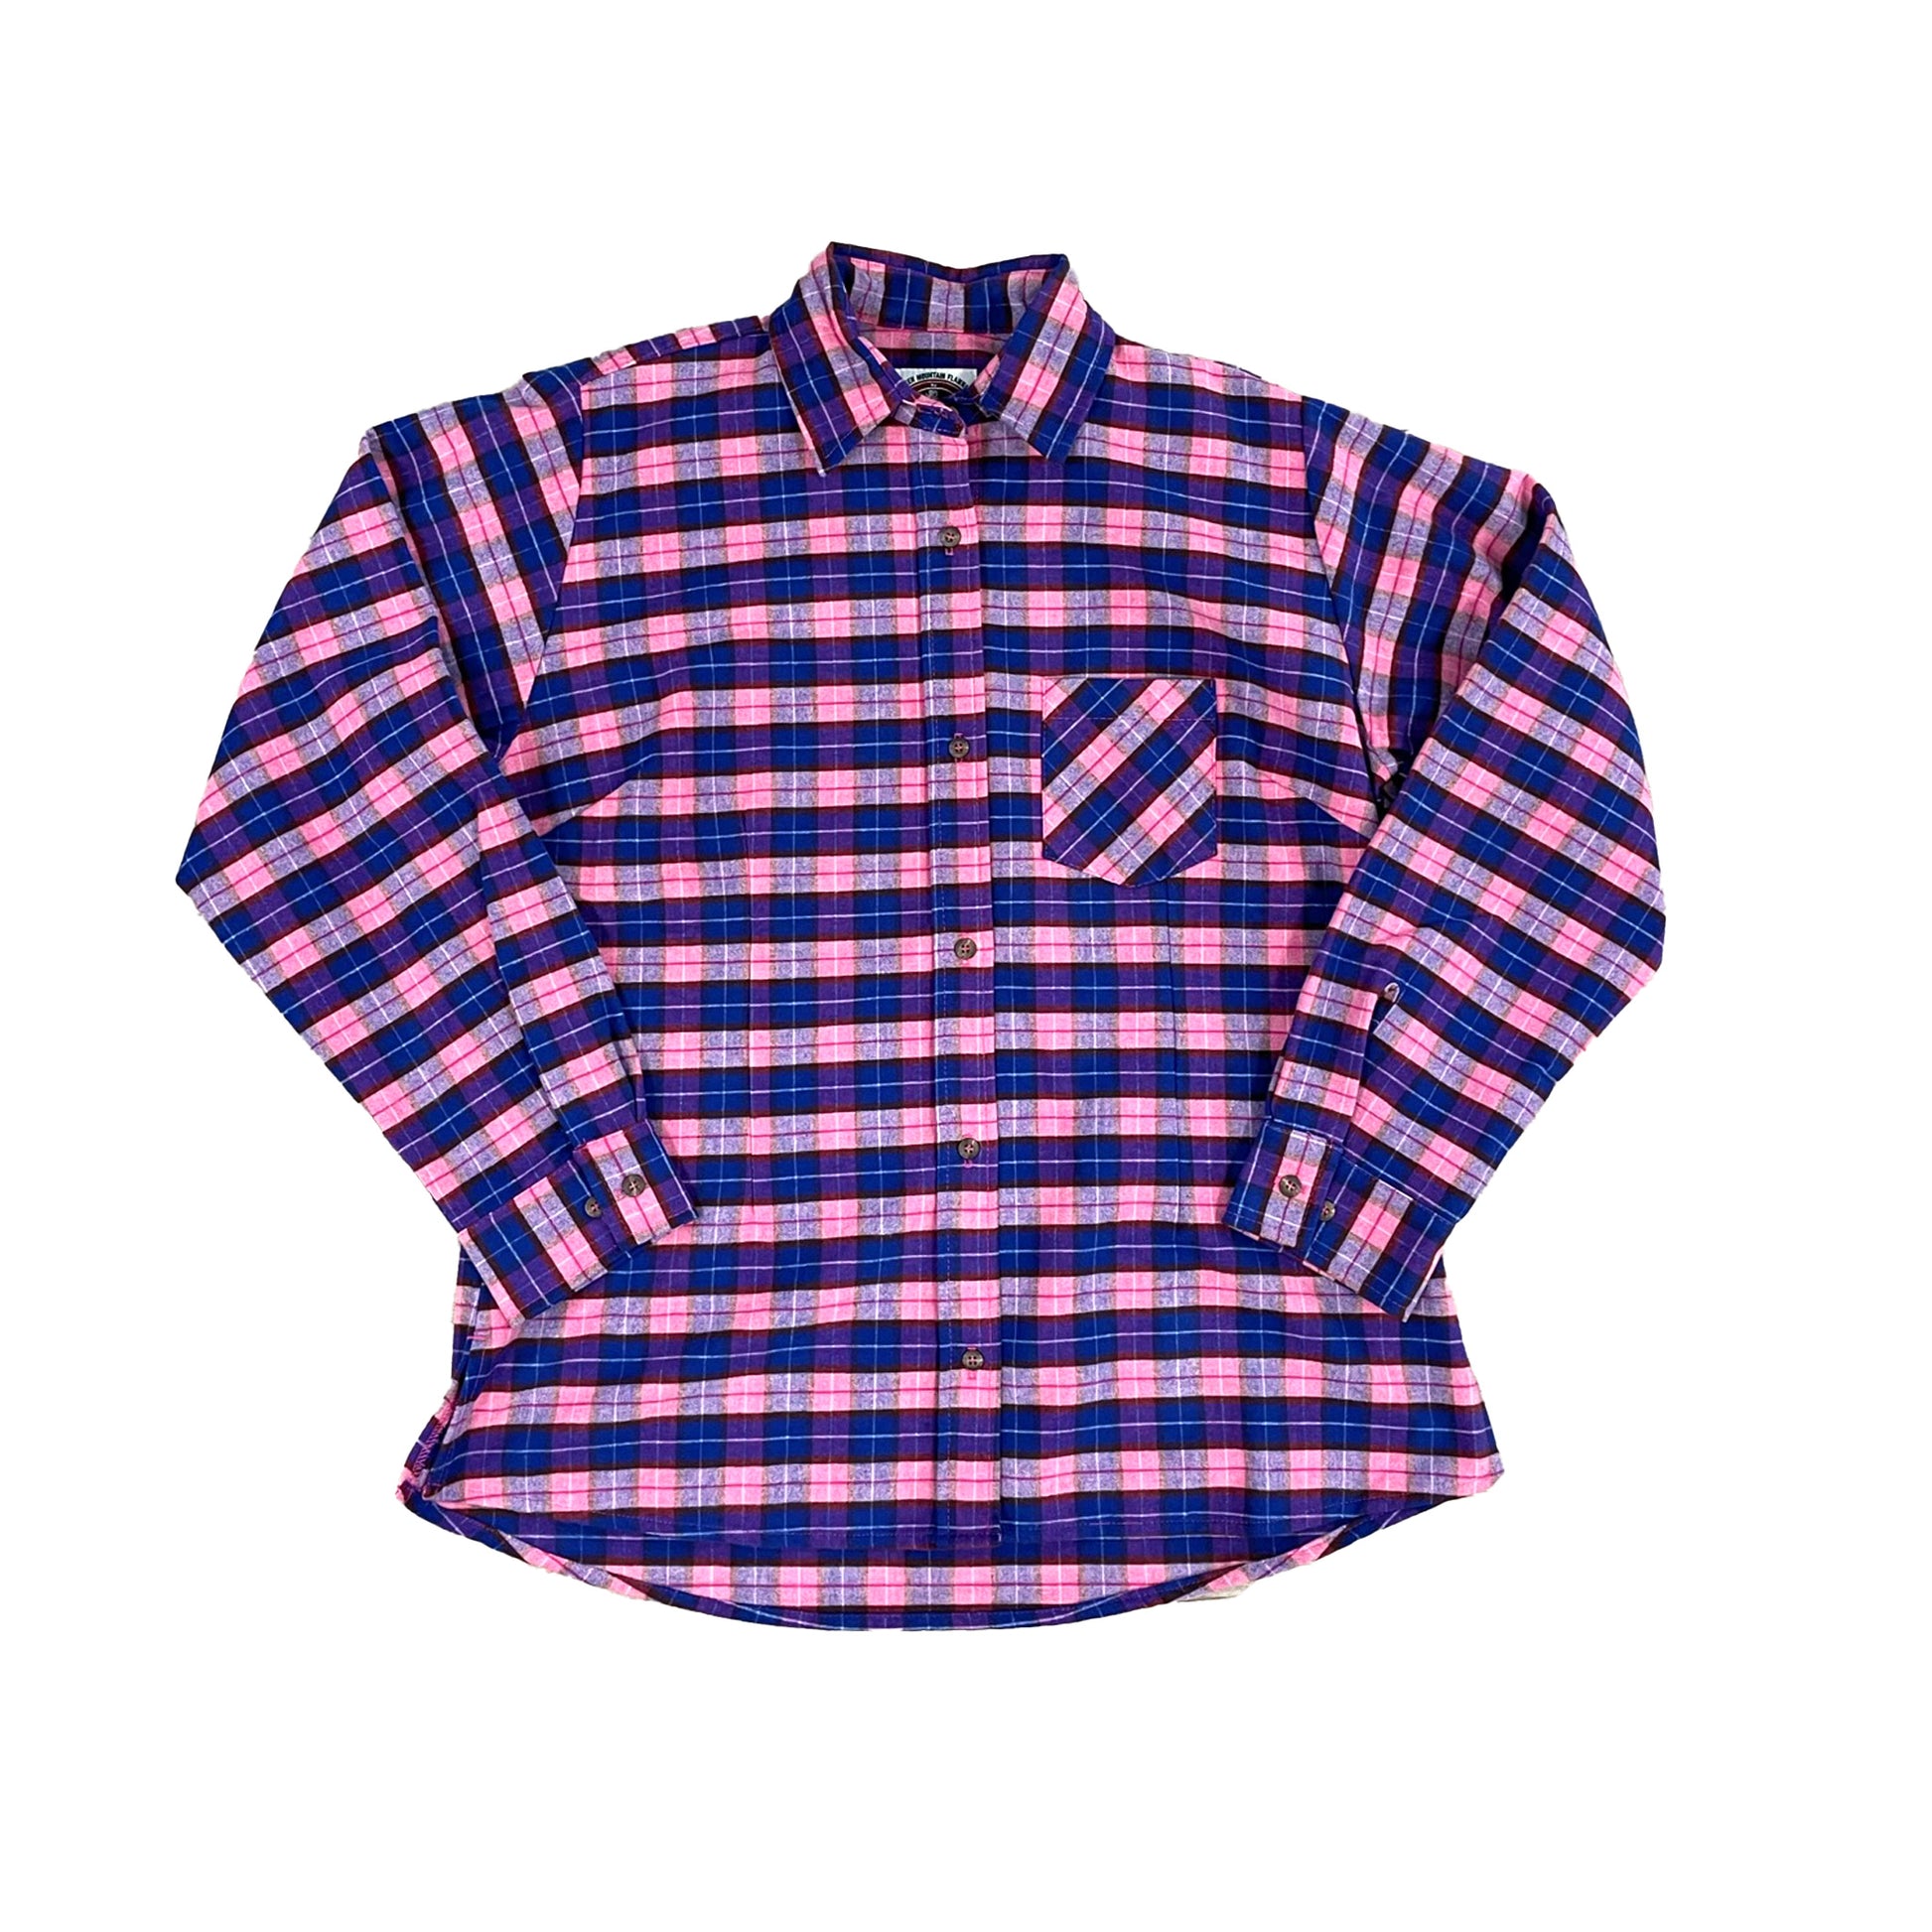 Women's flannel Pink plaid button down shirt